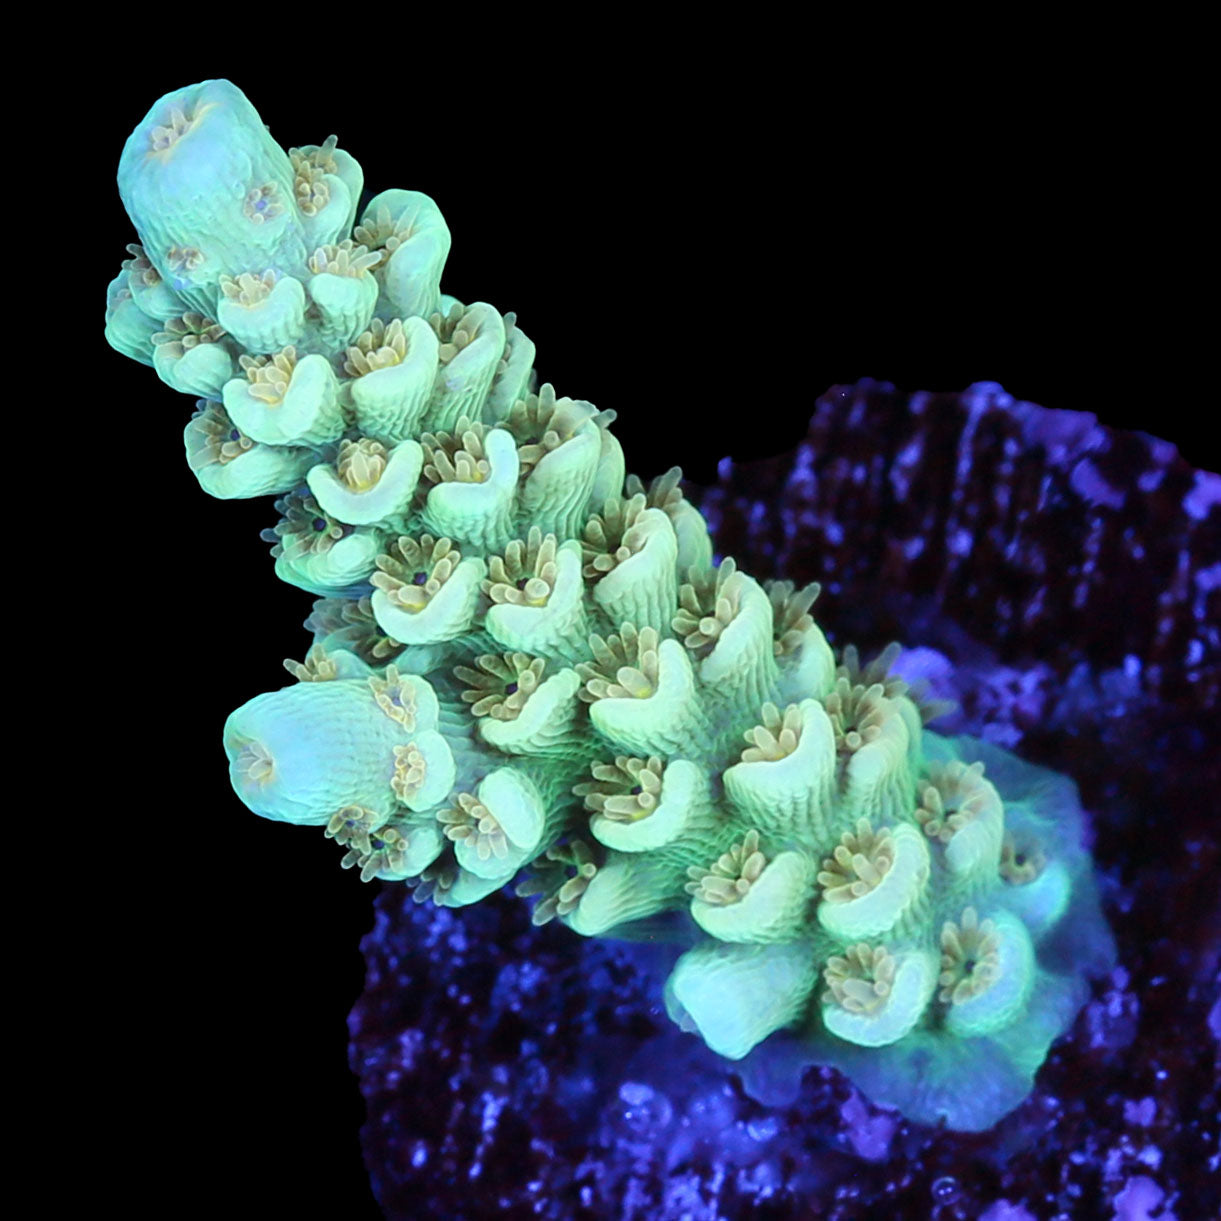 Vivid's Leprechaun Tenuis Acropora Coral - New Release